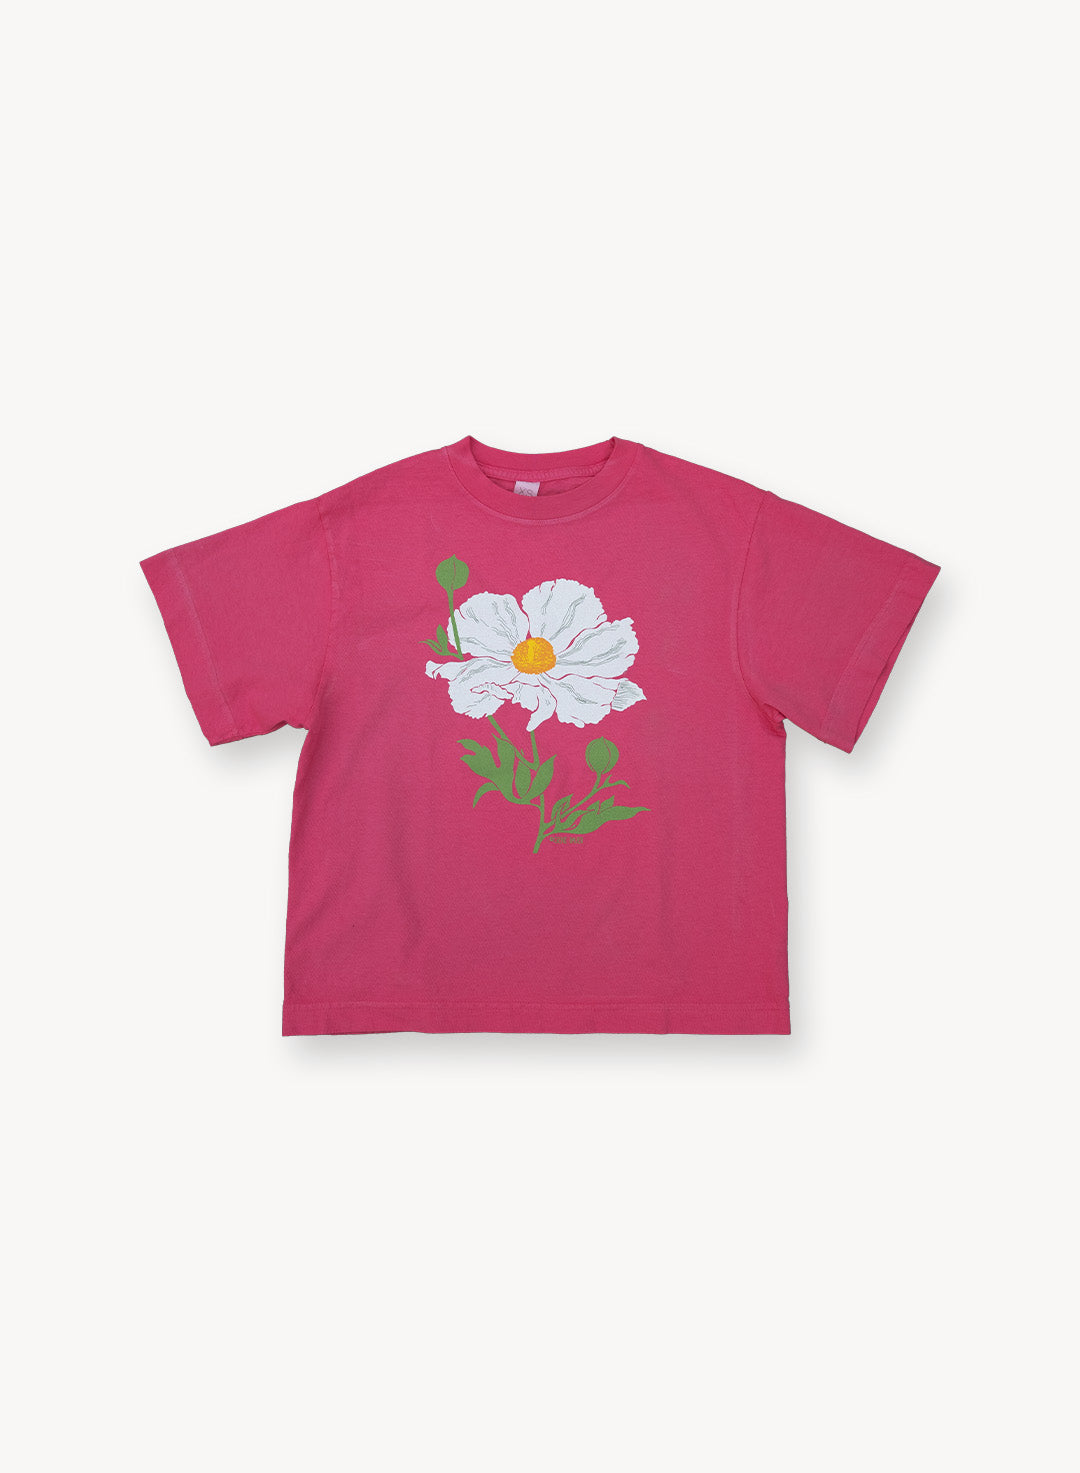 Youth Matilija Pink T-Shirt